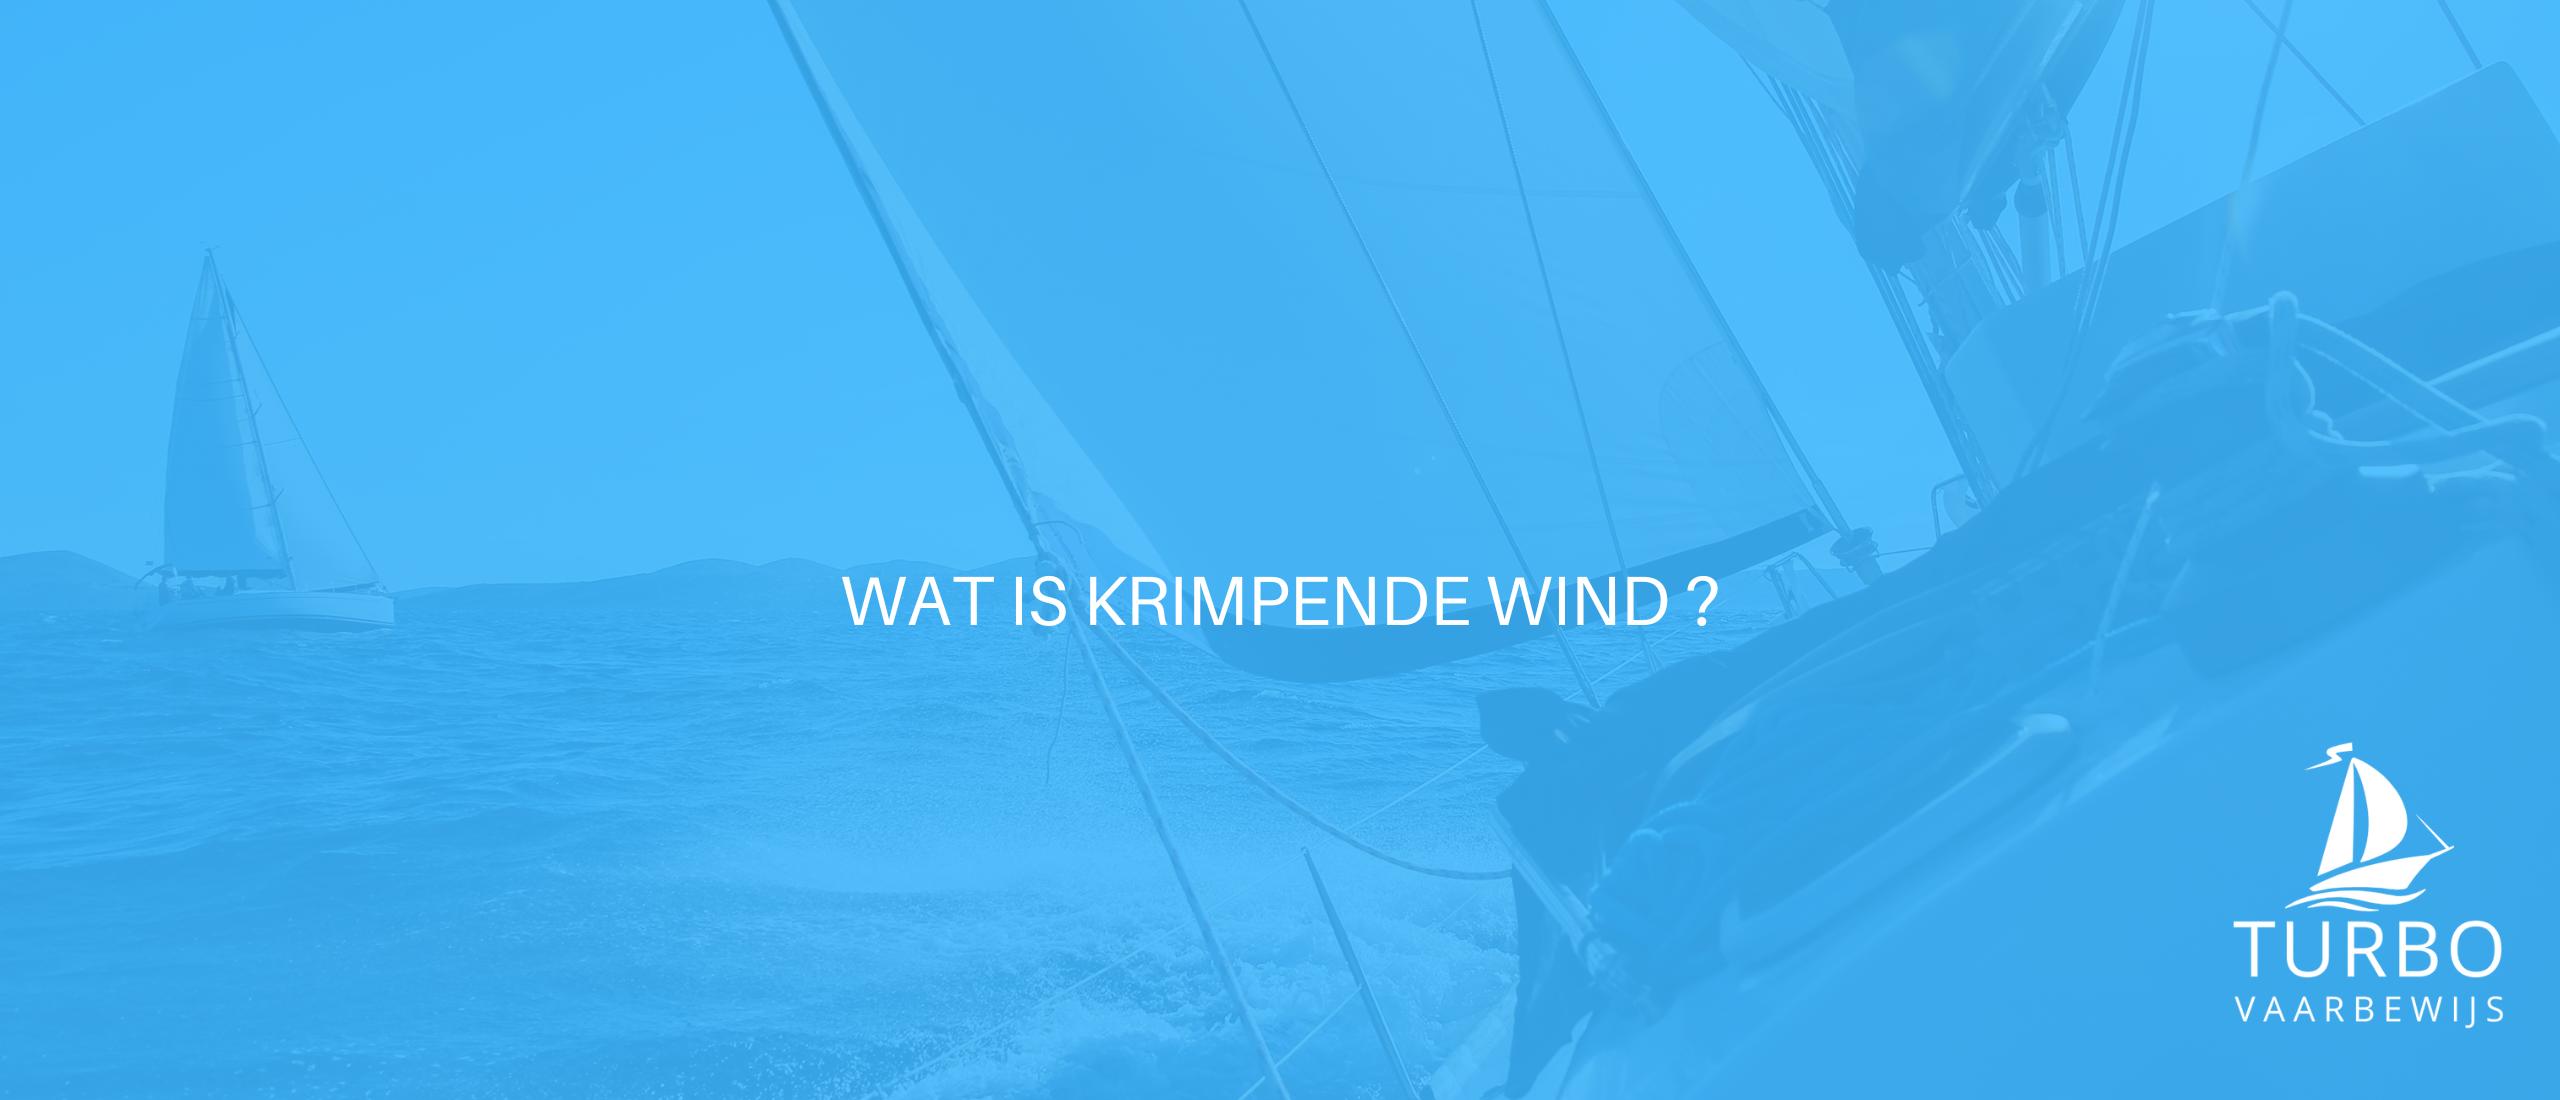 Wat is krimpende wind?